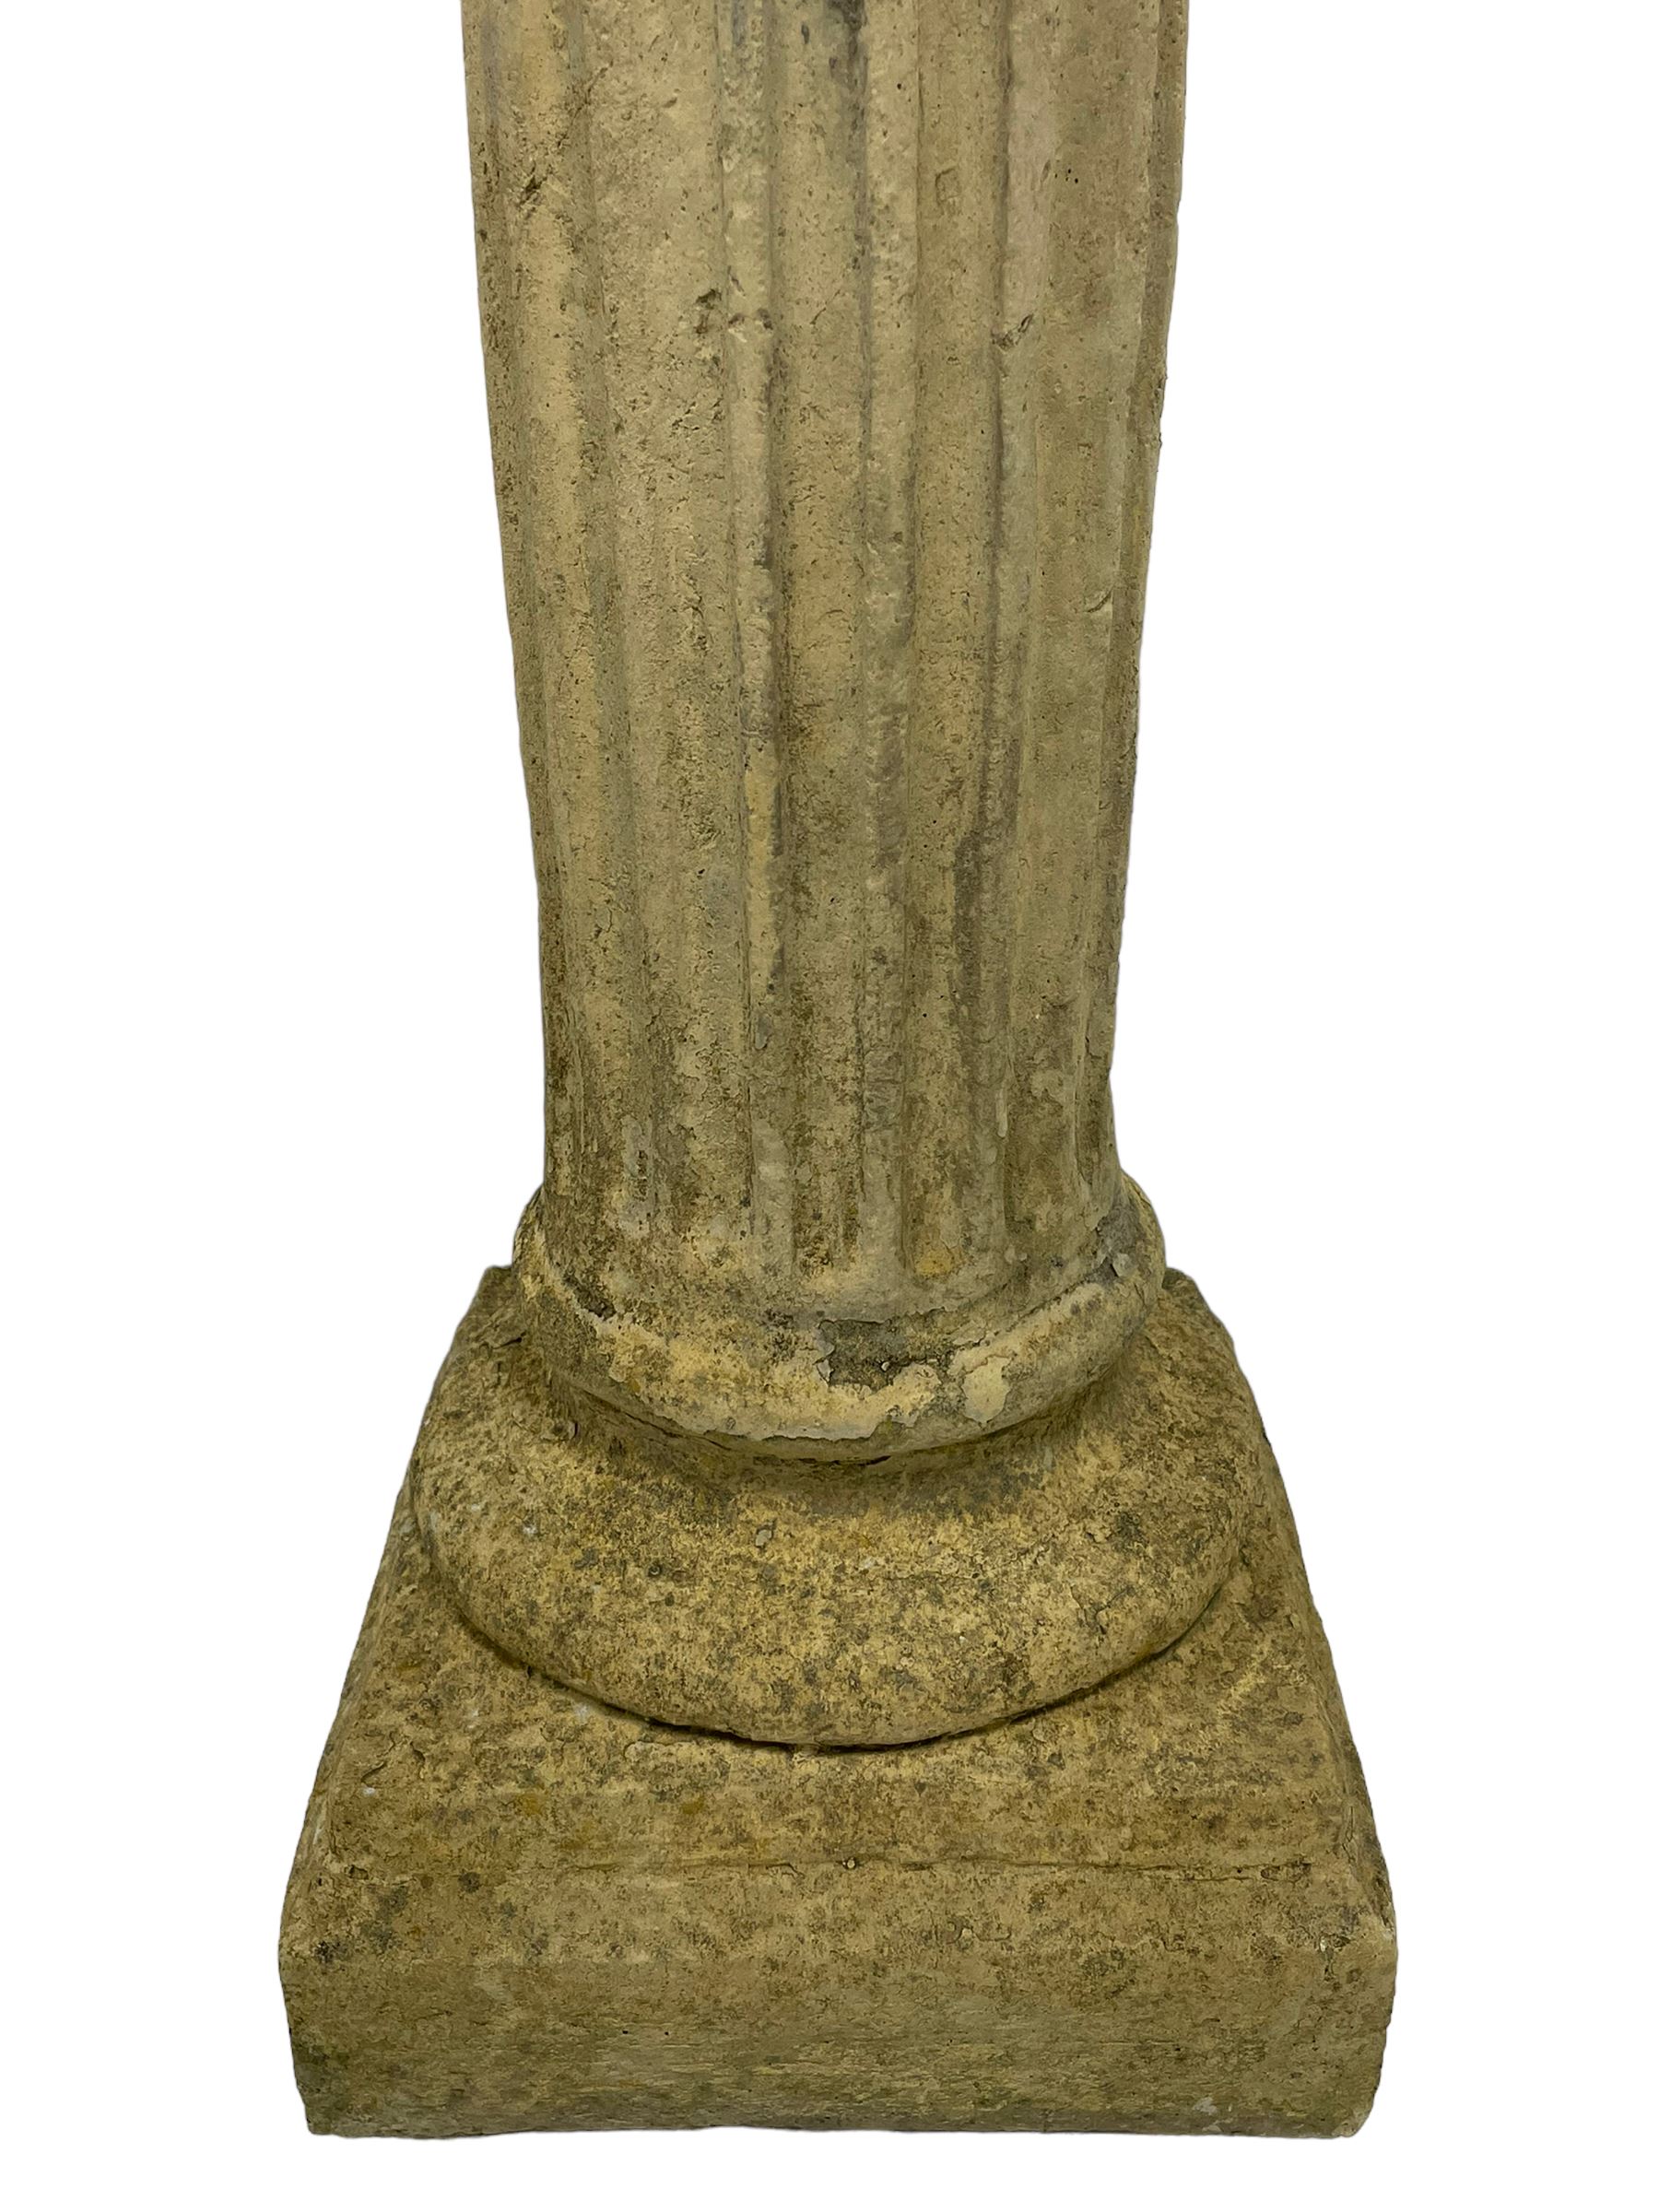 Composite stone classical design bust of Apollo Belvedere - Image 3 of 9